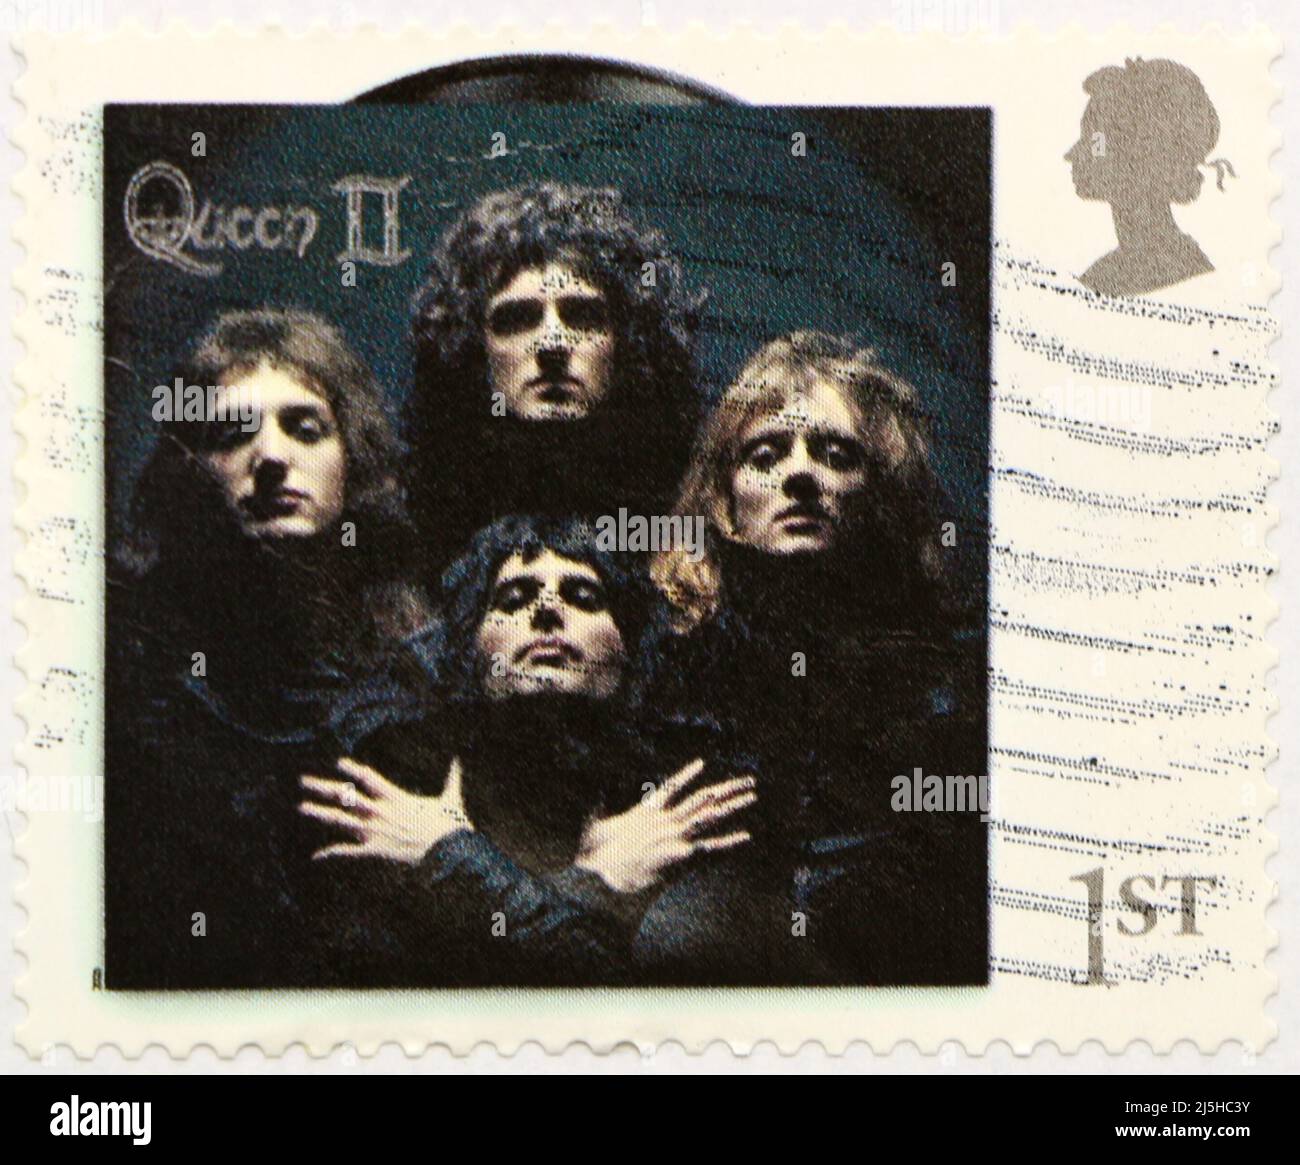 Queen - copertina originale in vinile - The Miracle - 1989 Foto stock -  Alamy